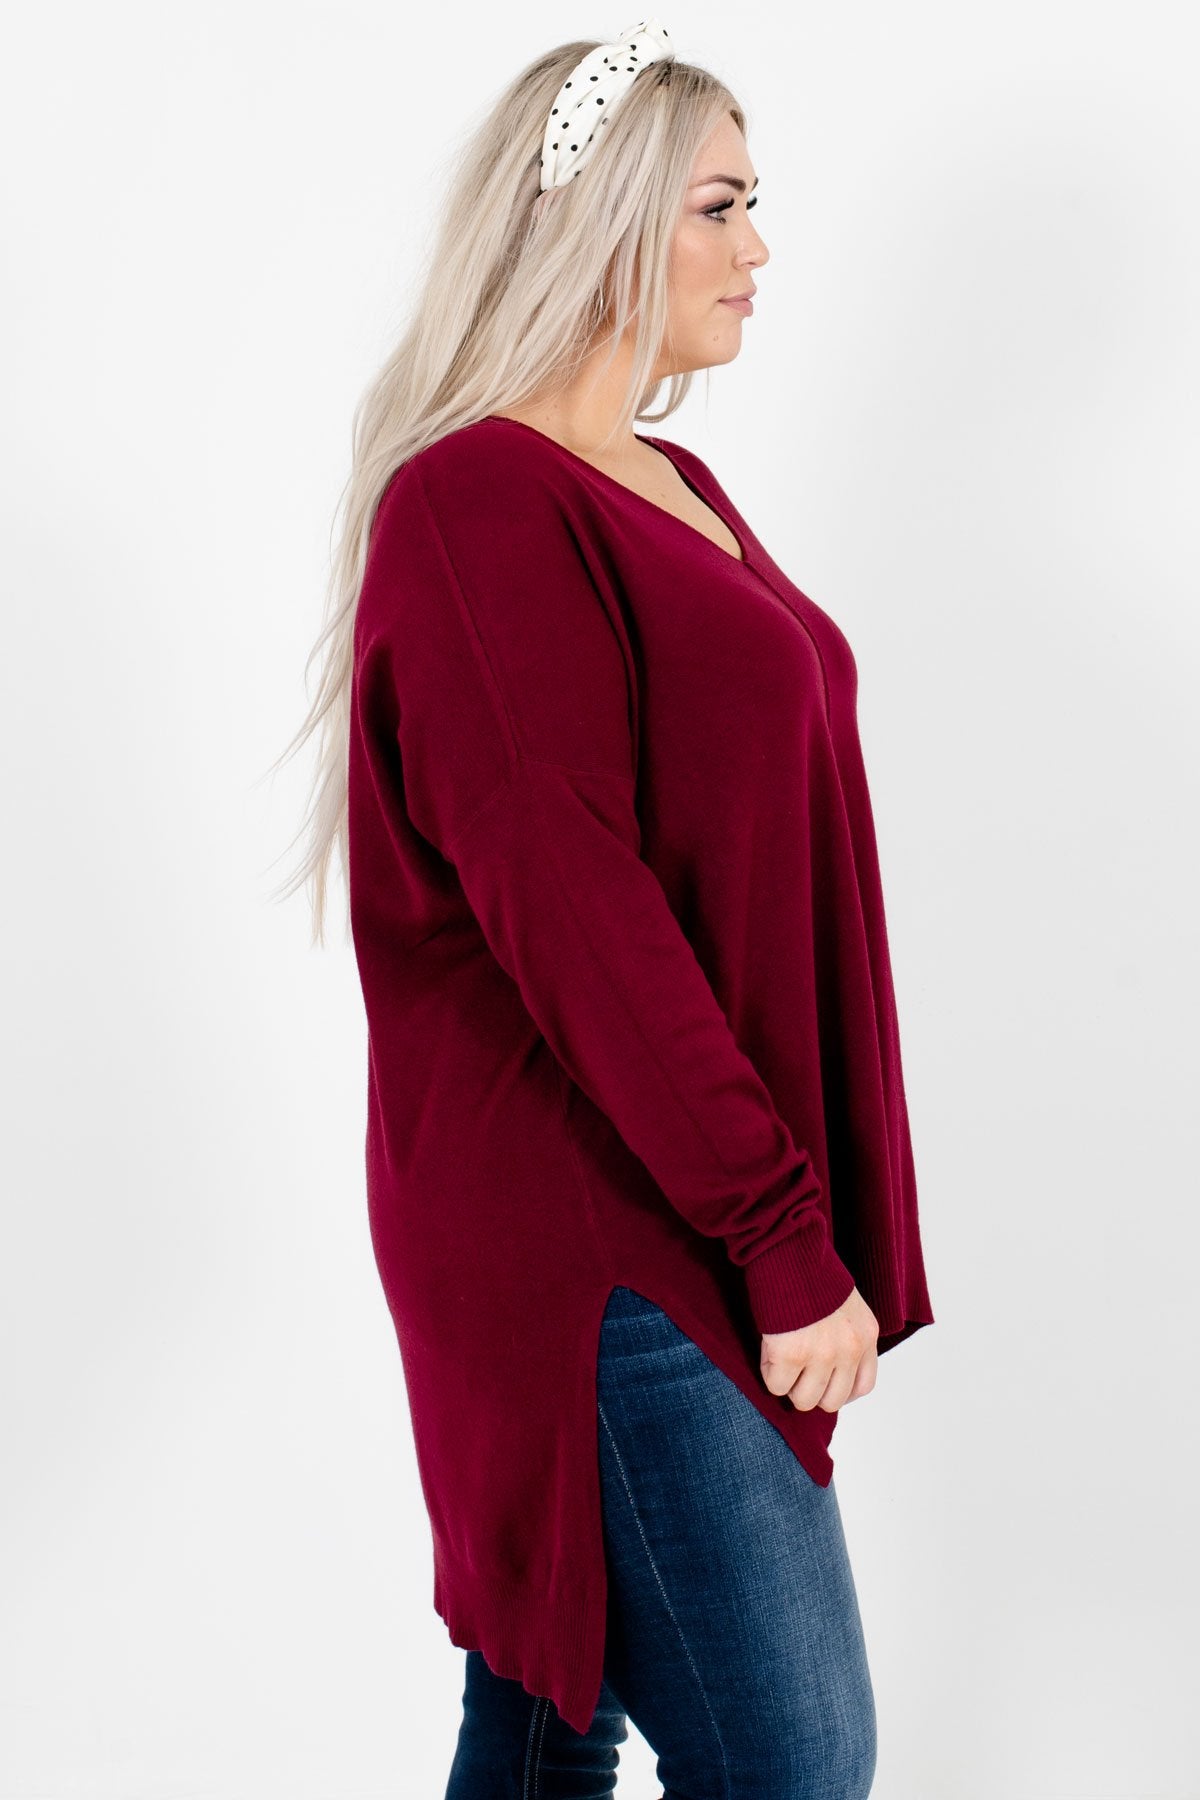 Burgundy V-Neckline Boutique Sweaters for Women